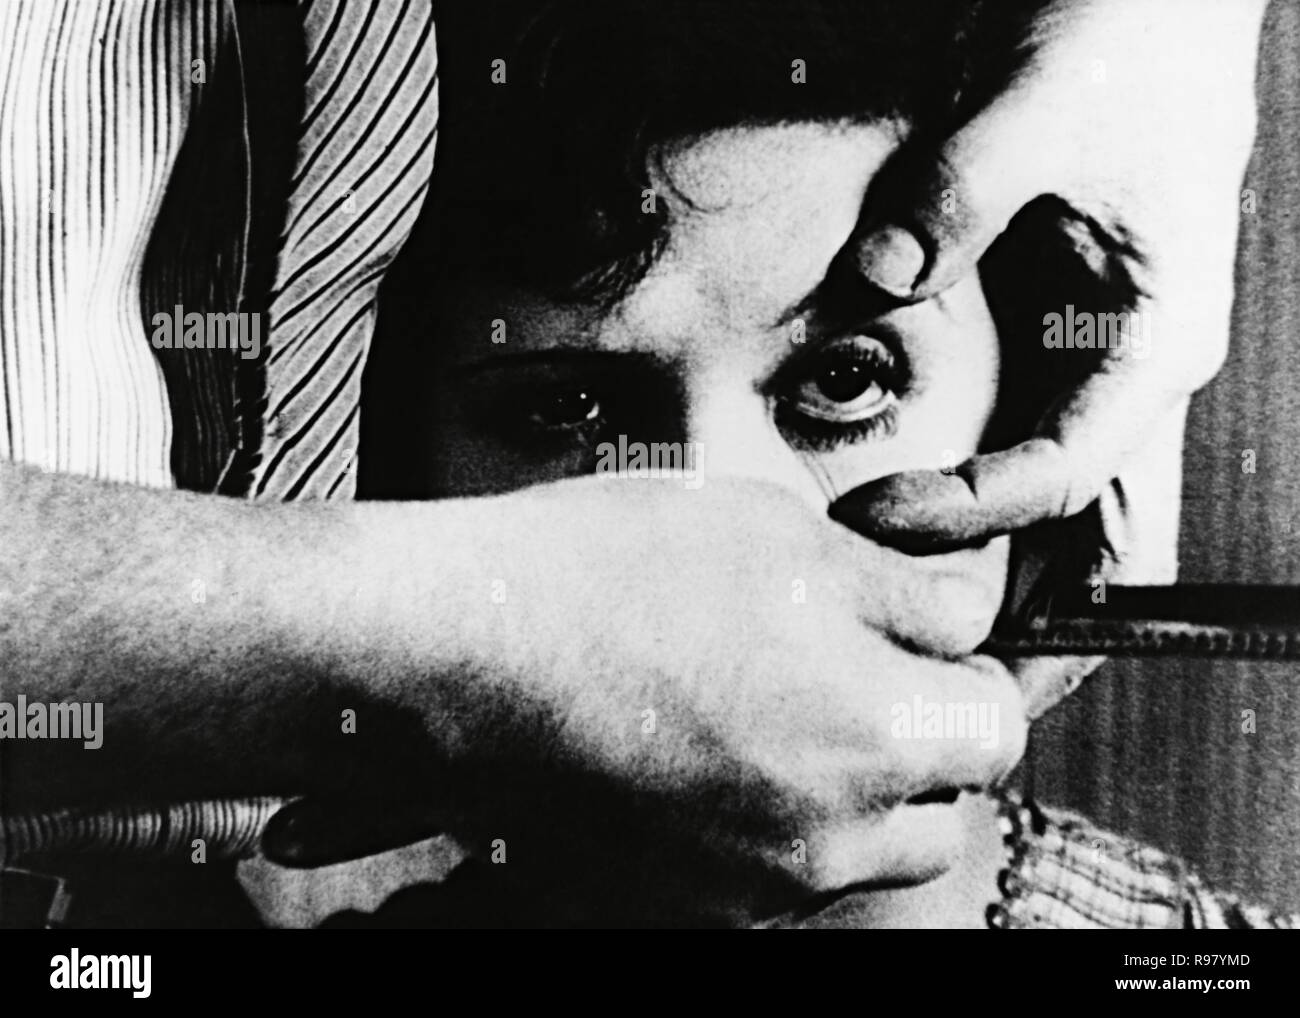 Original film title: UN CHIEN ANDALOU. English title: AN ANDALUSIAN DOG. Year: 1929. Director: LUIS BUÑUEL. Credit: BUNUEL-DALI / Album Stock Photo